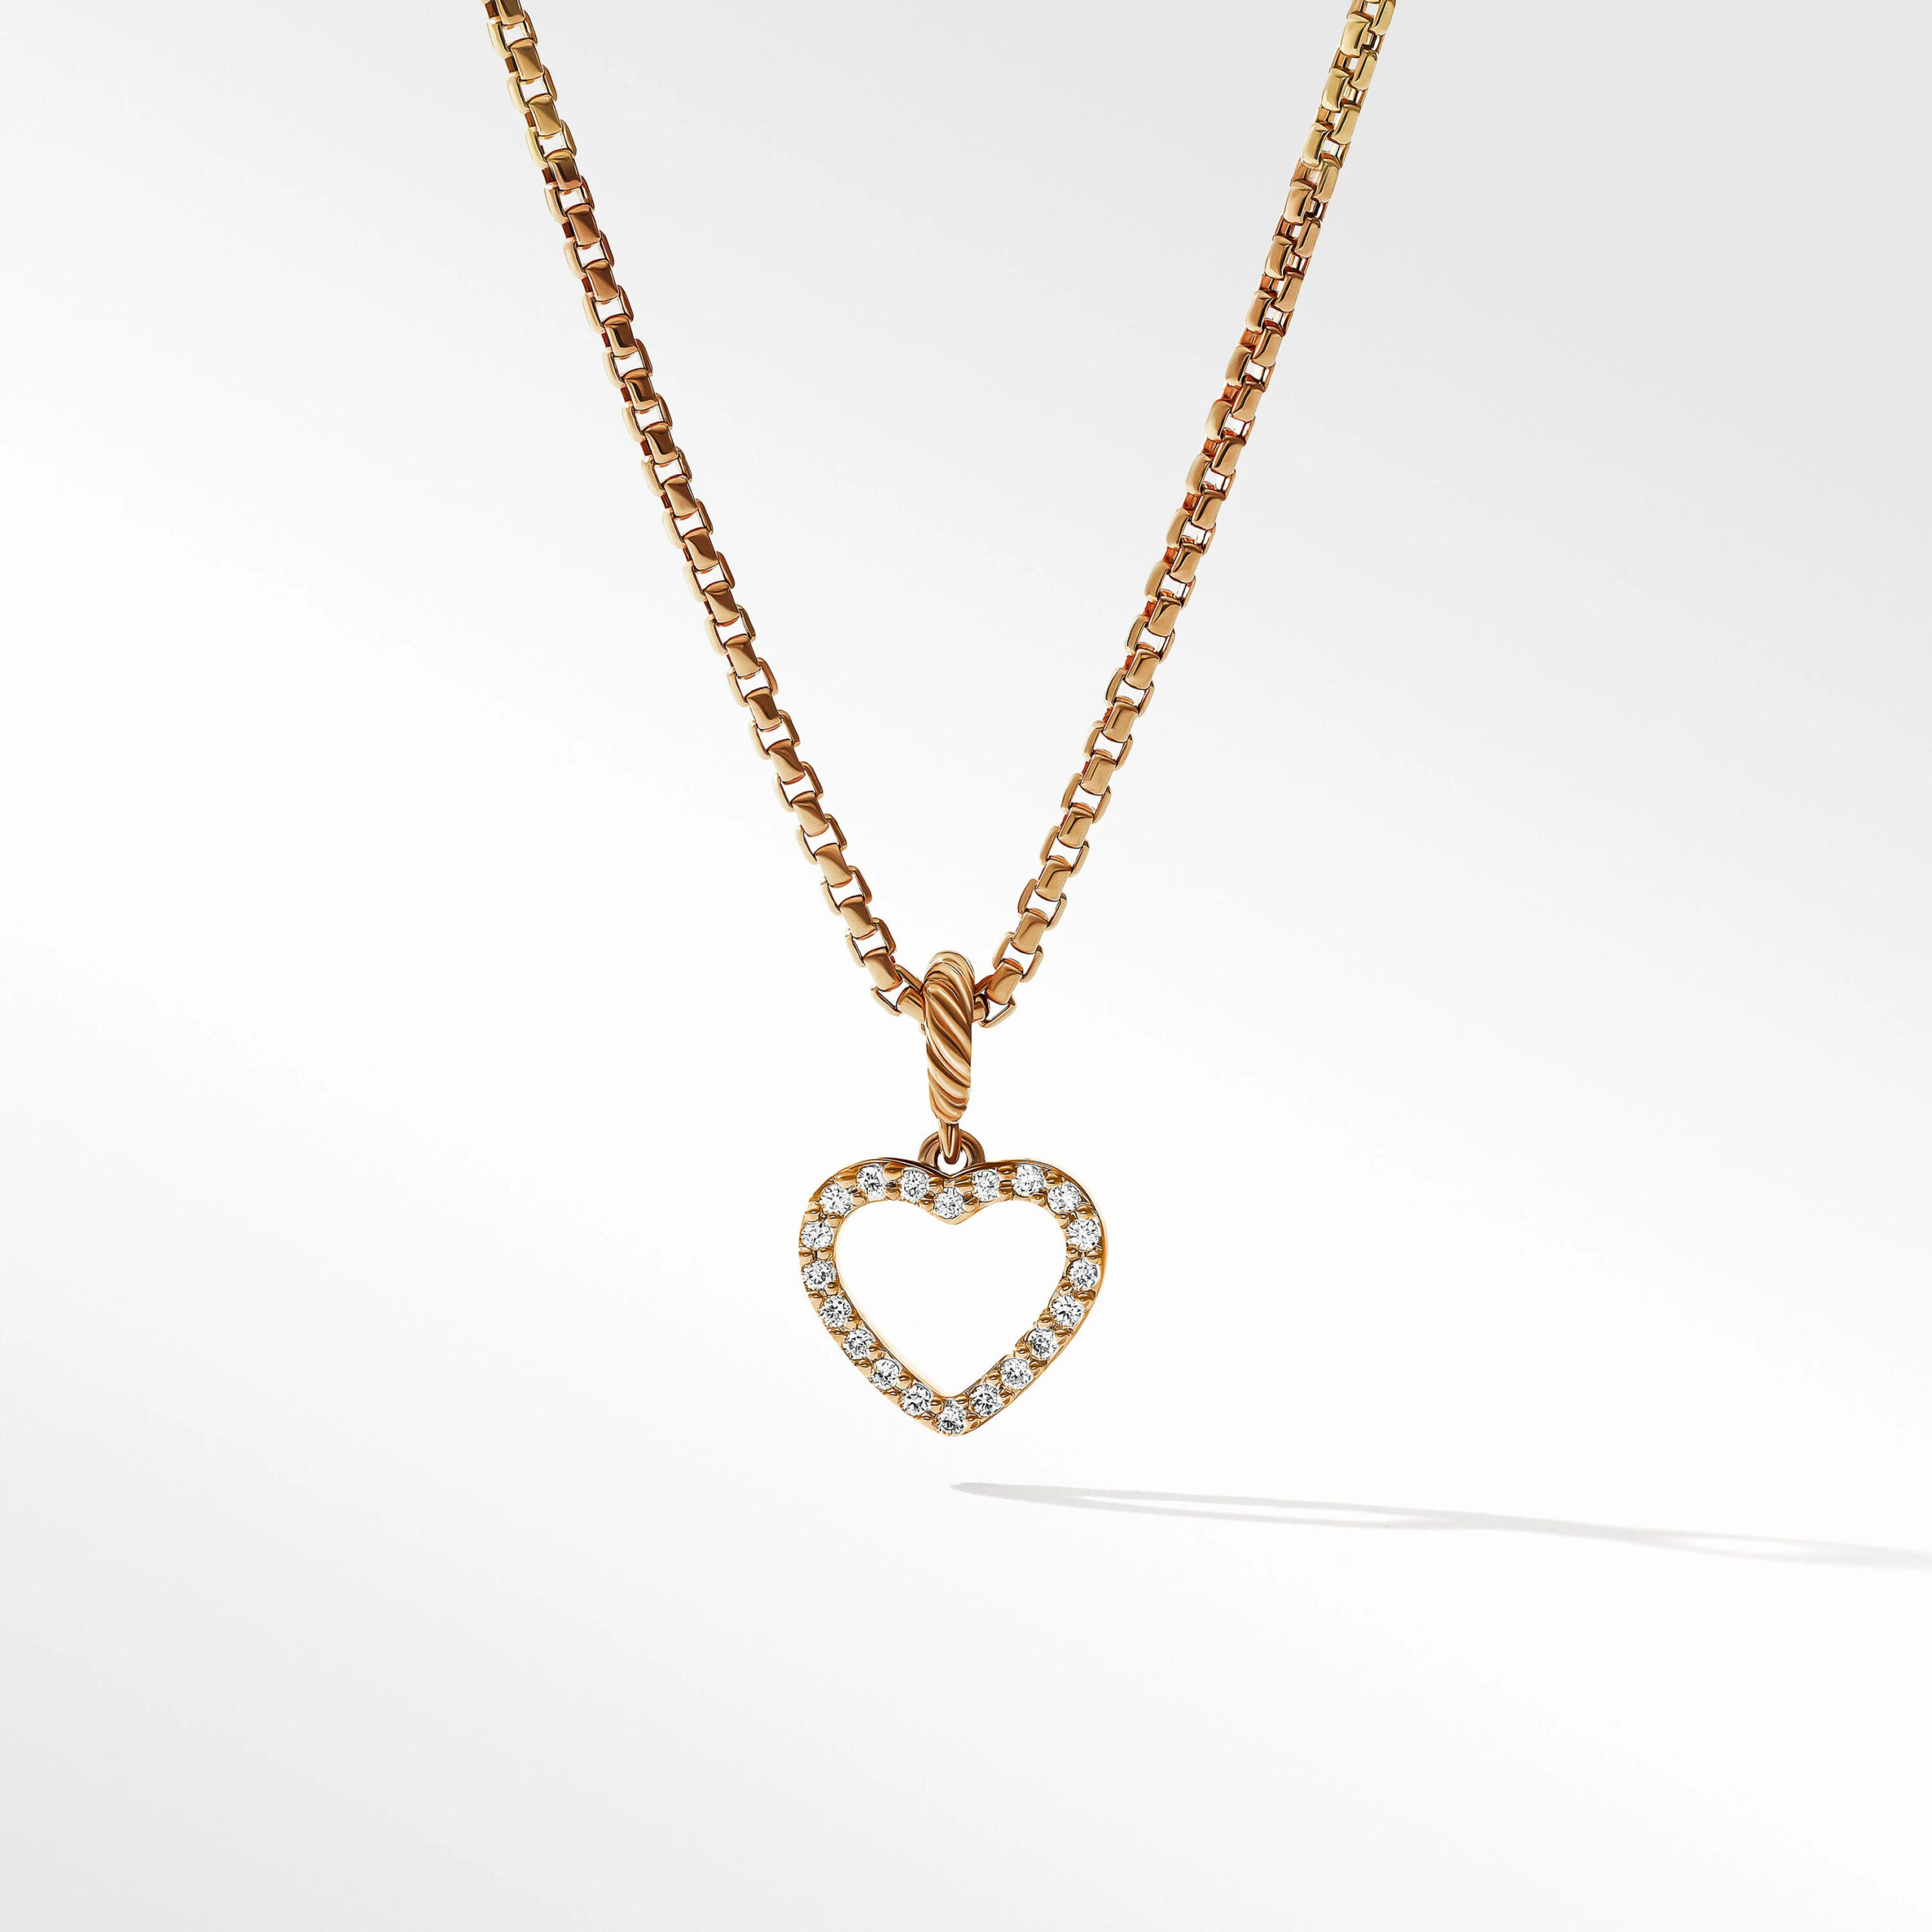 Gold David Yurman necklace with a diamond heart charm.